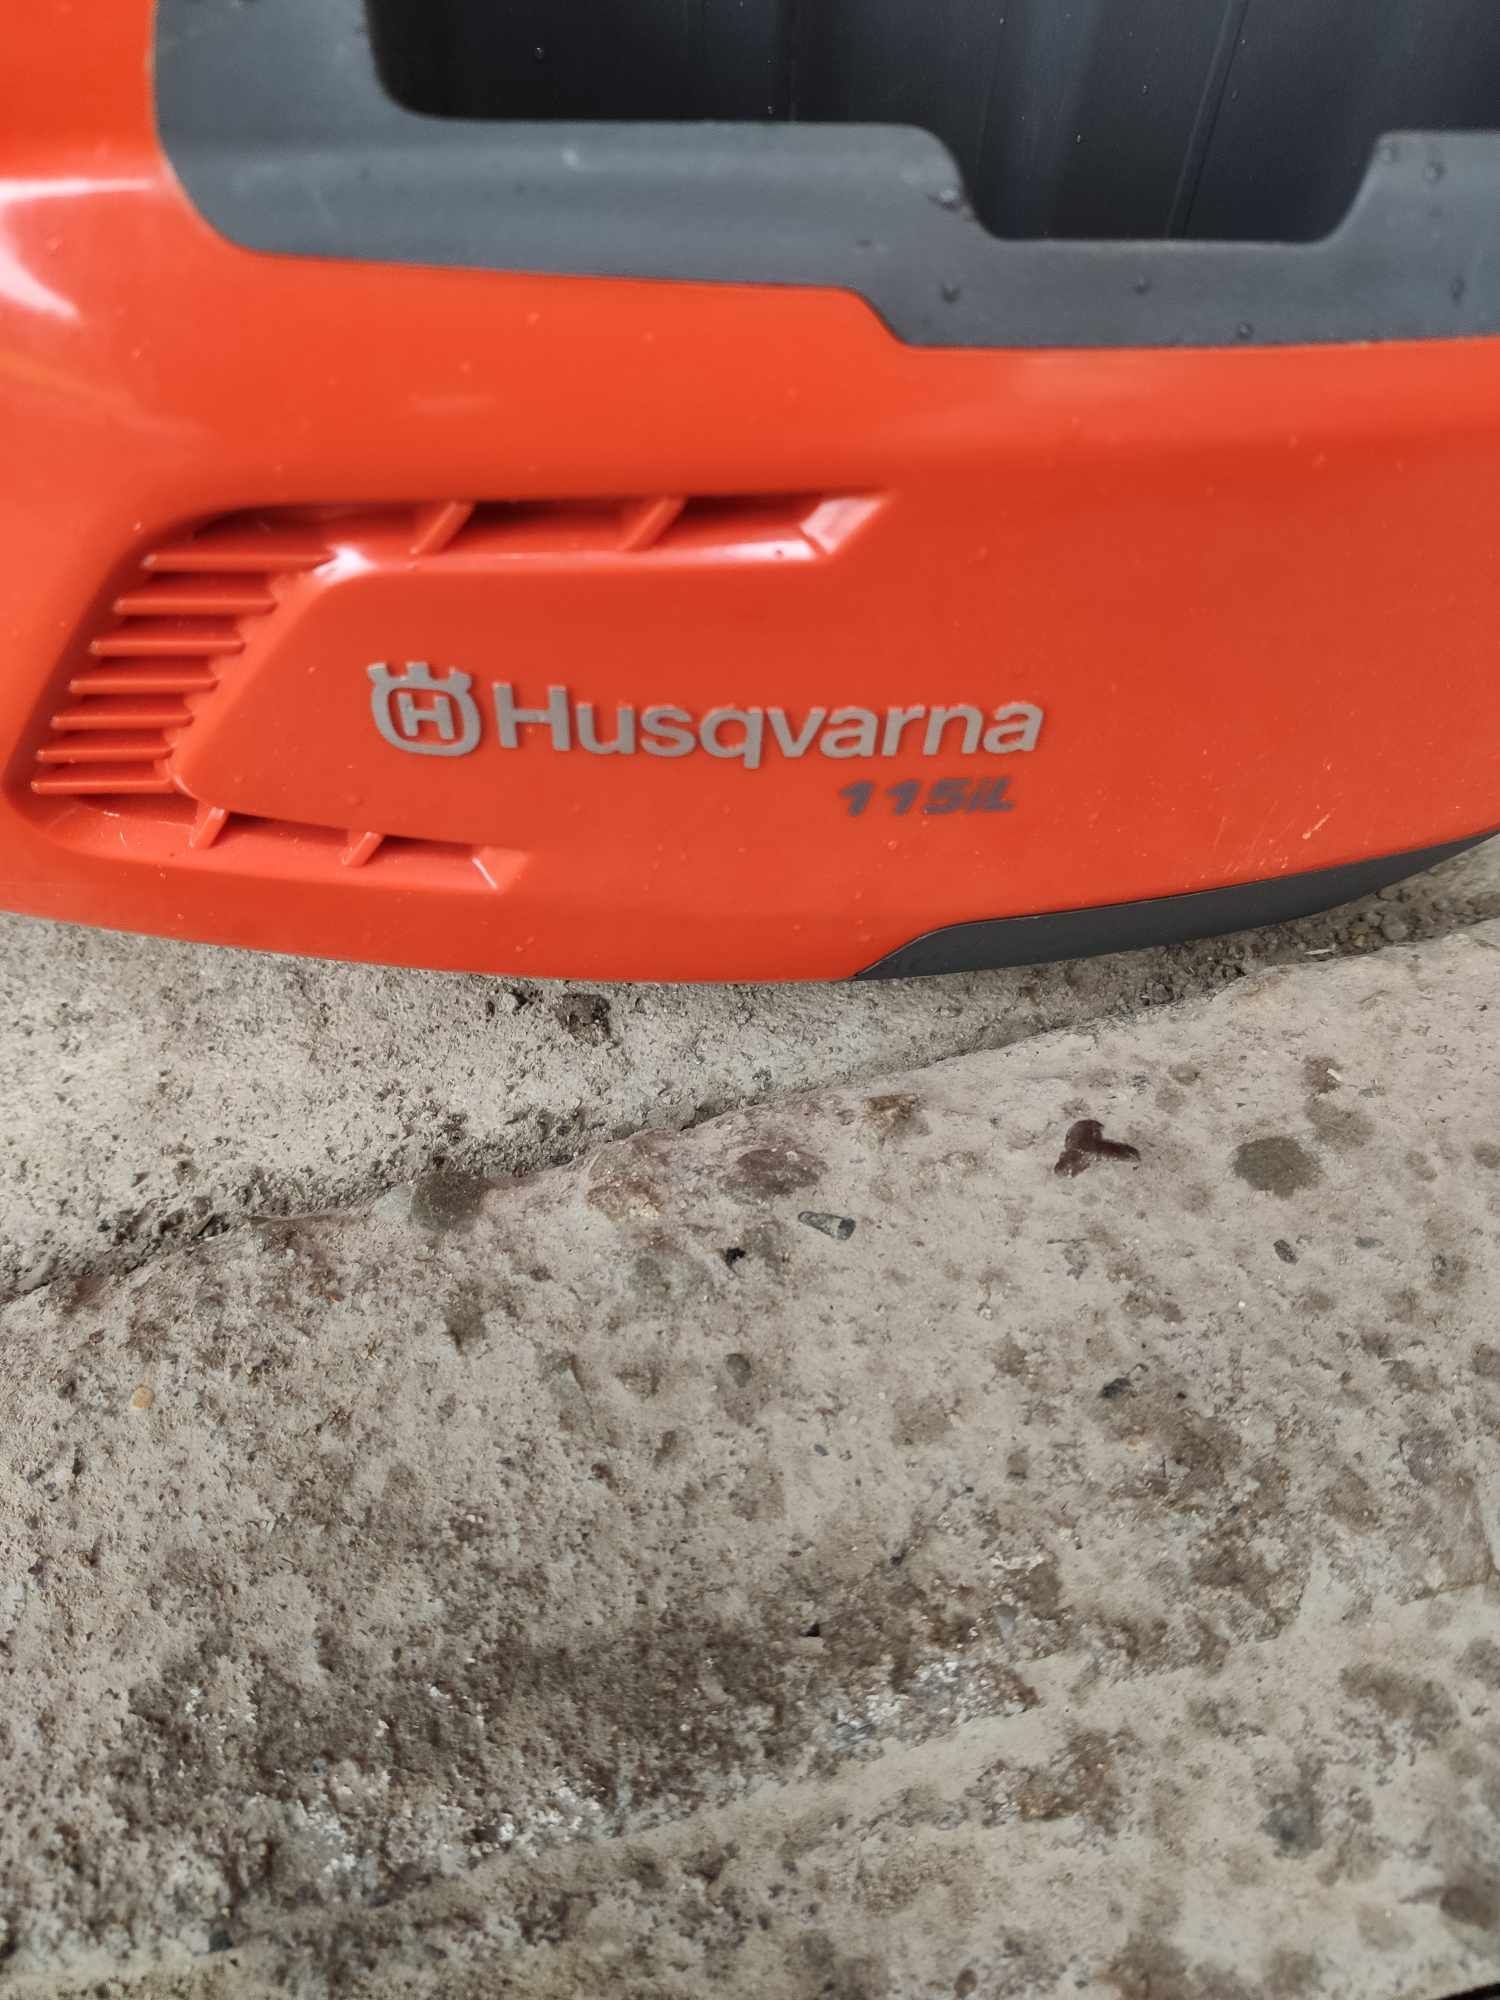 Zestaw narzędzi Husqvarna nożyce podkaszarka